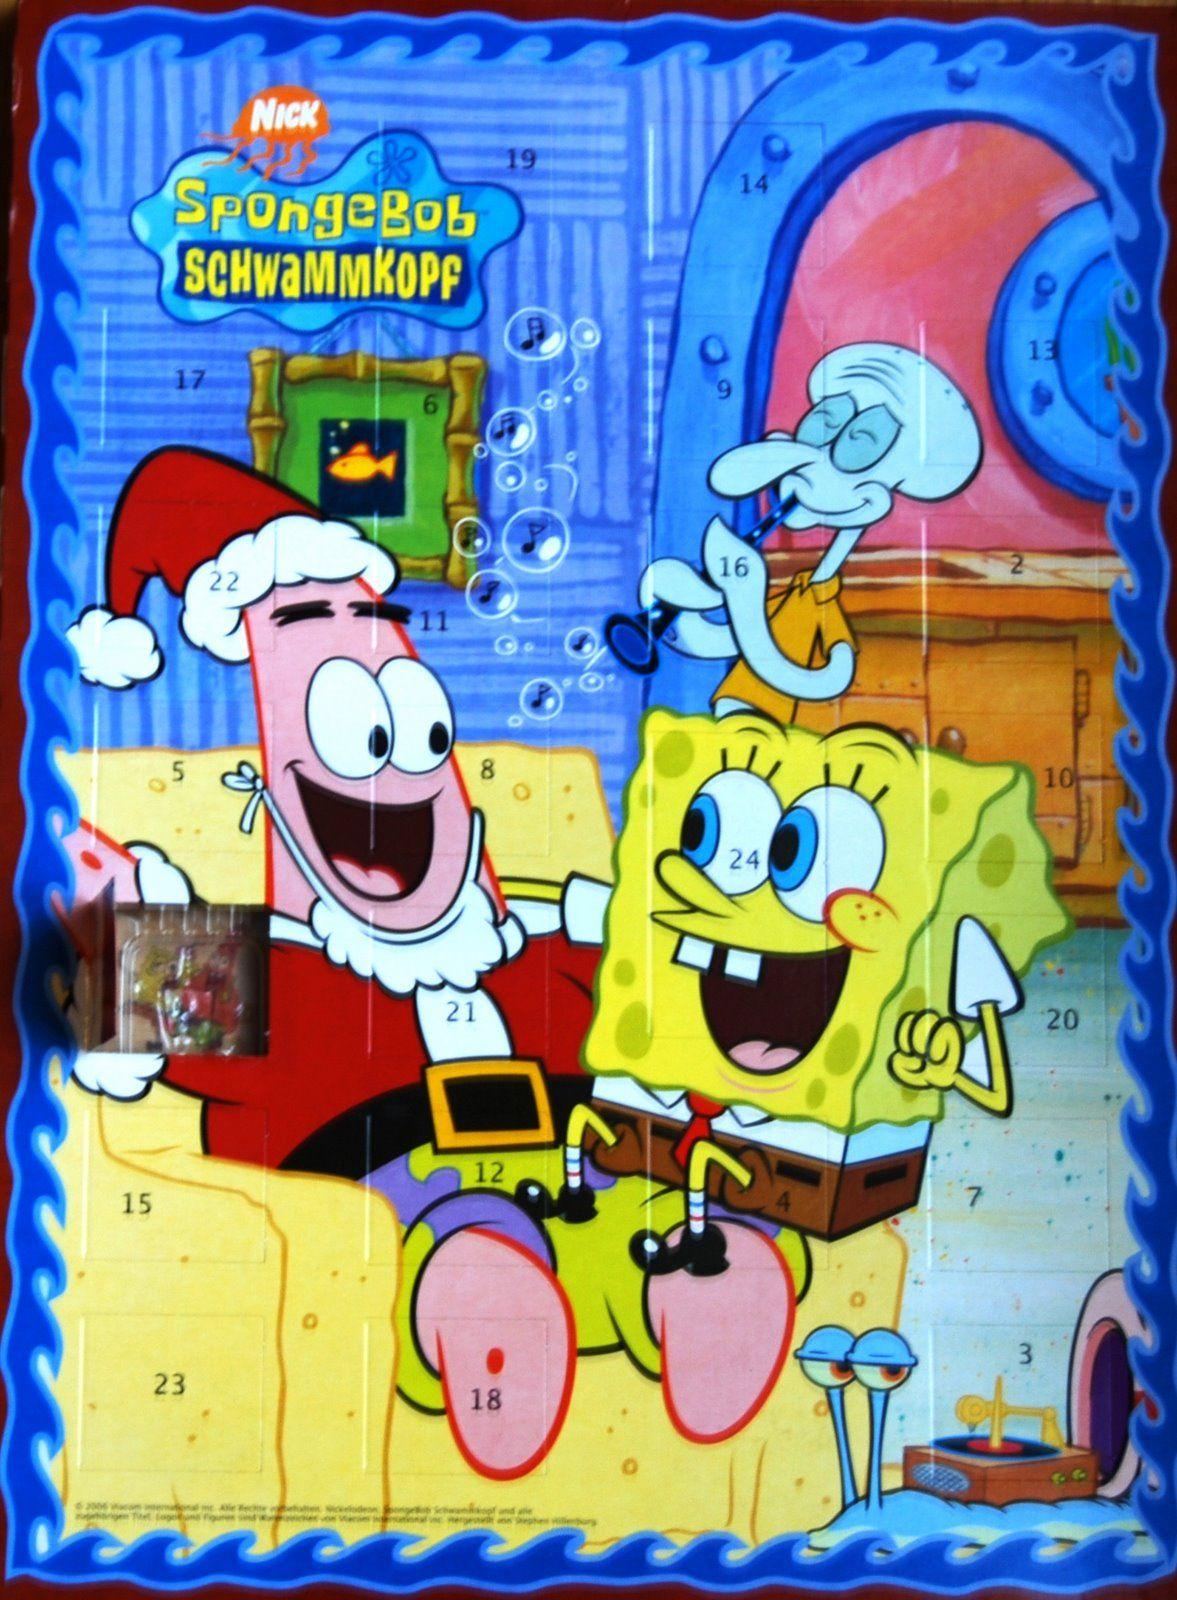 Spongebob and Patrick Christmas wallpaper  Spongebob Squarepants Wallpaper  40584606  Fanpop